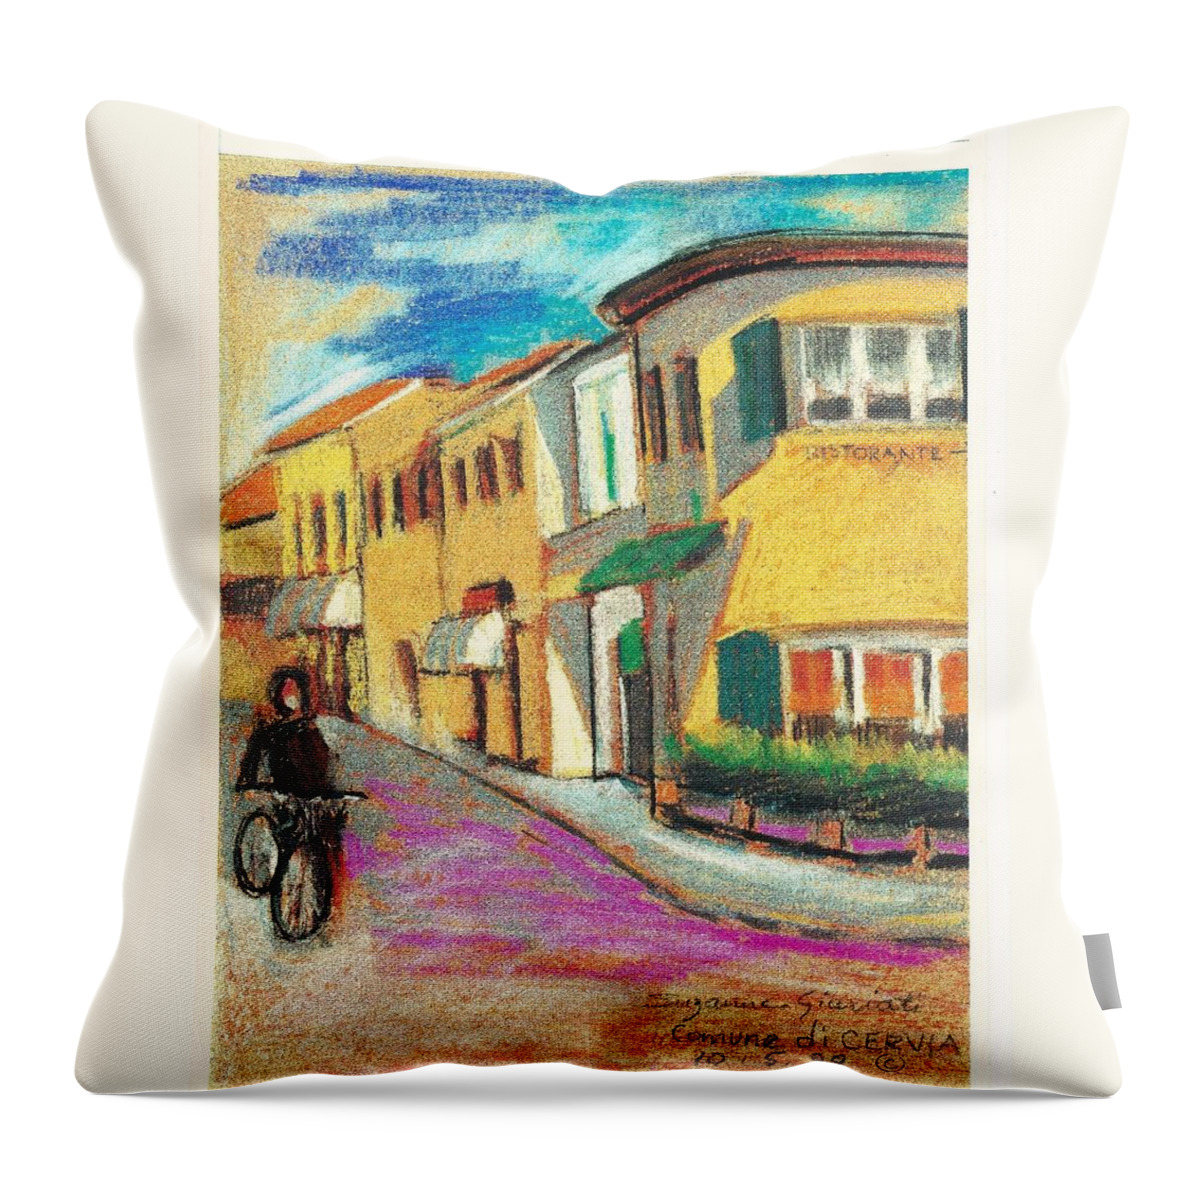 La Bichicletta Throw Pillow featuring the painting La Bichicletta by Suzanne Giuriati Cerny